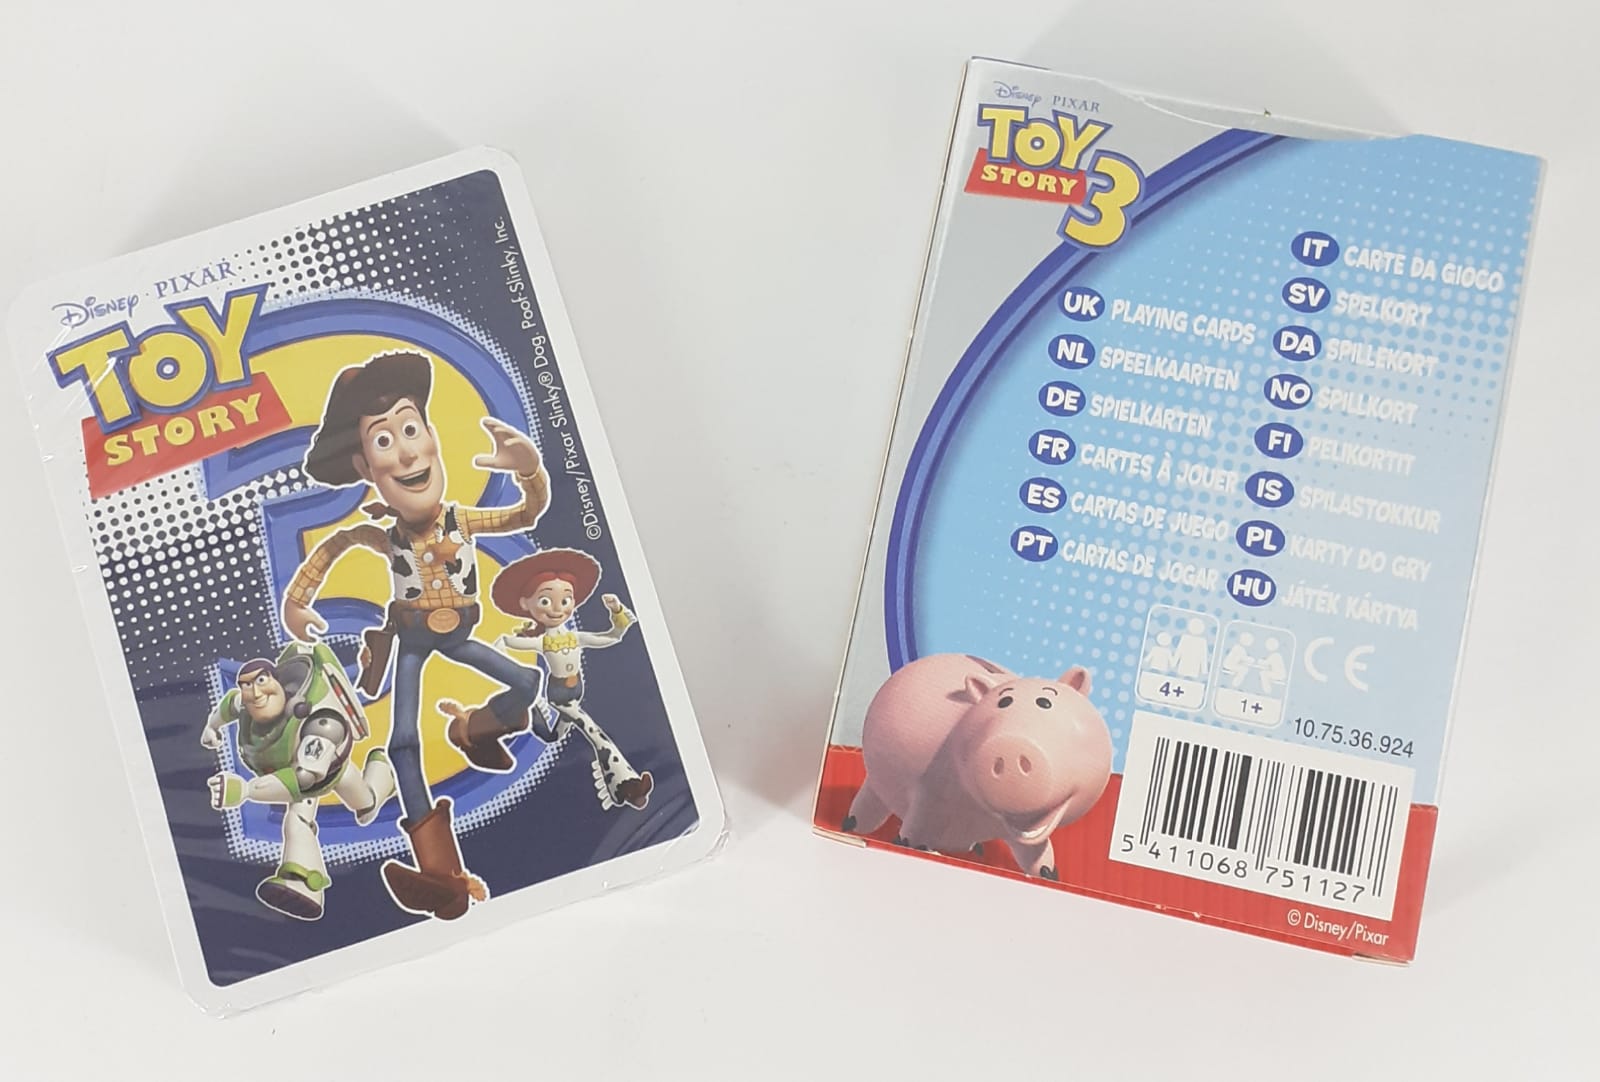 Mazzo Carte da gioco Toy Story 3